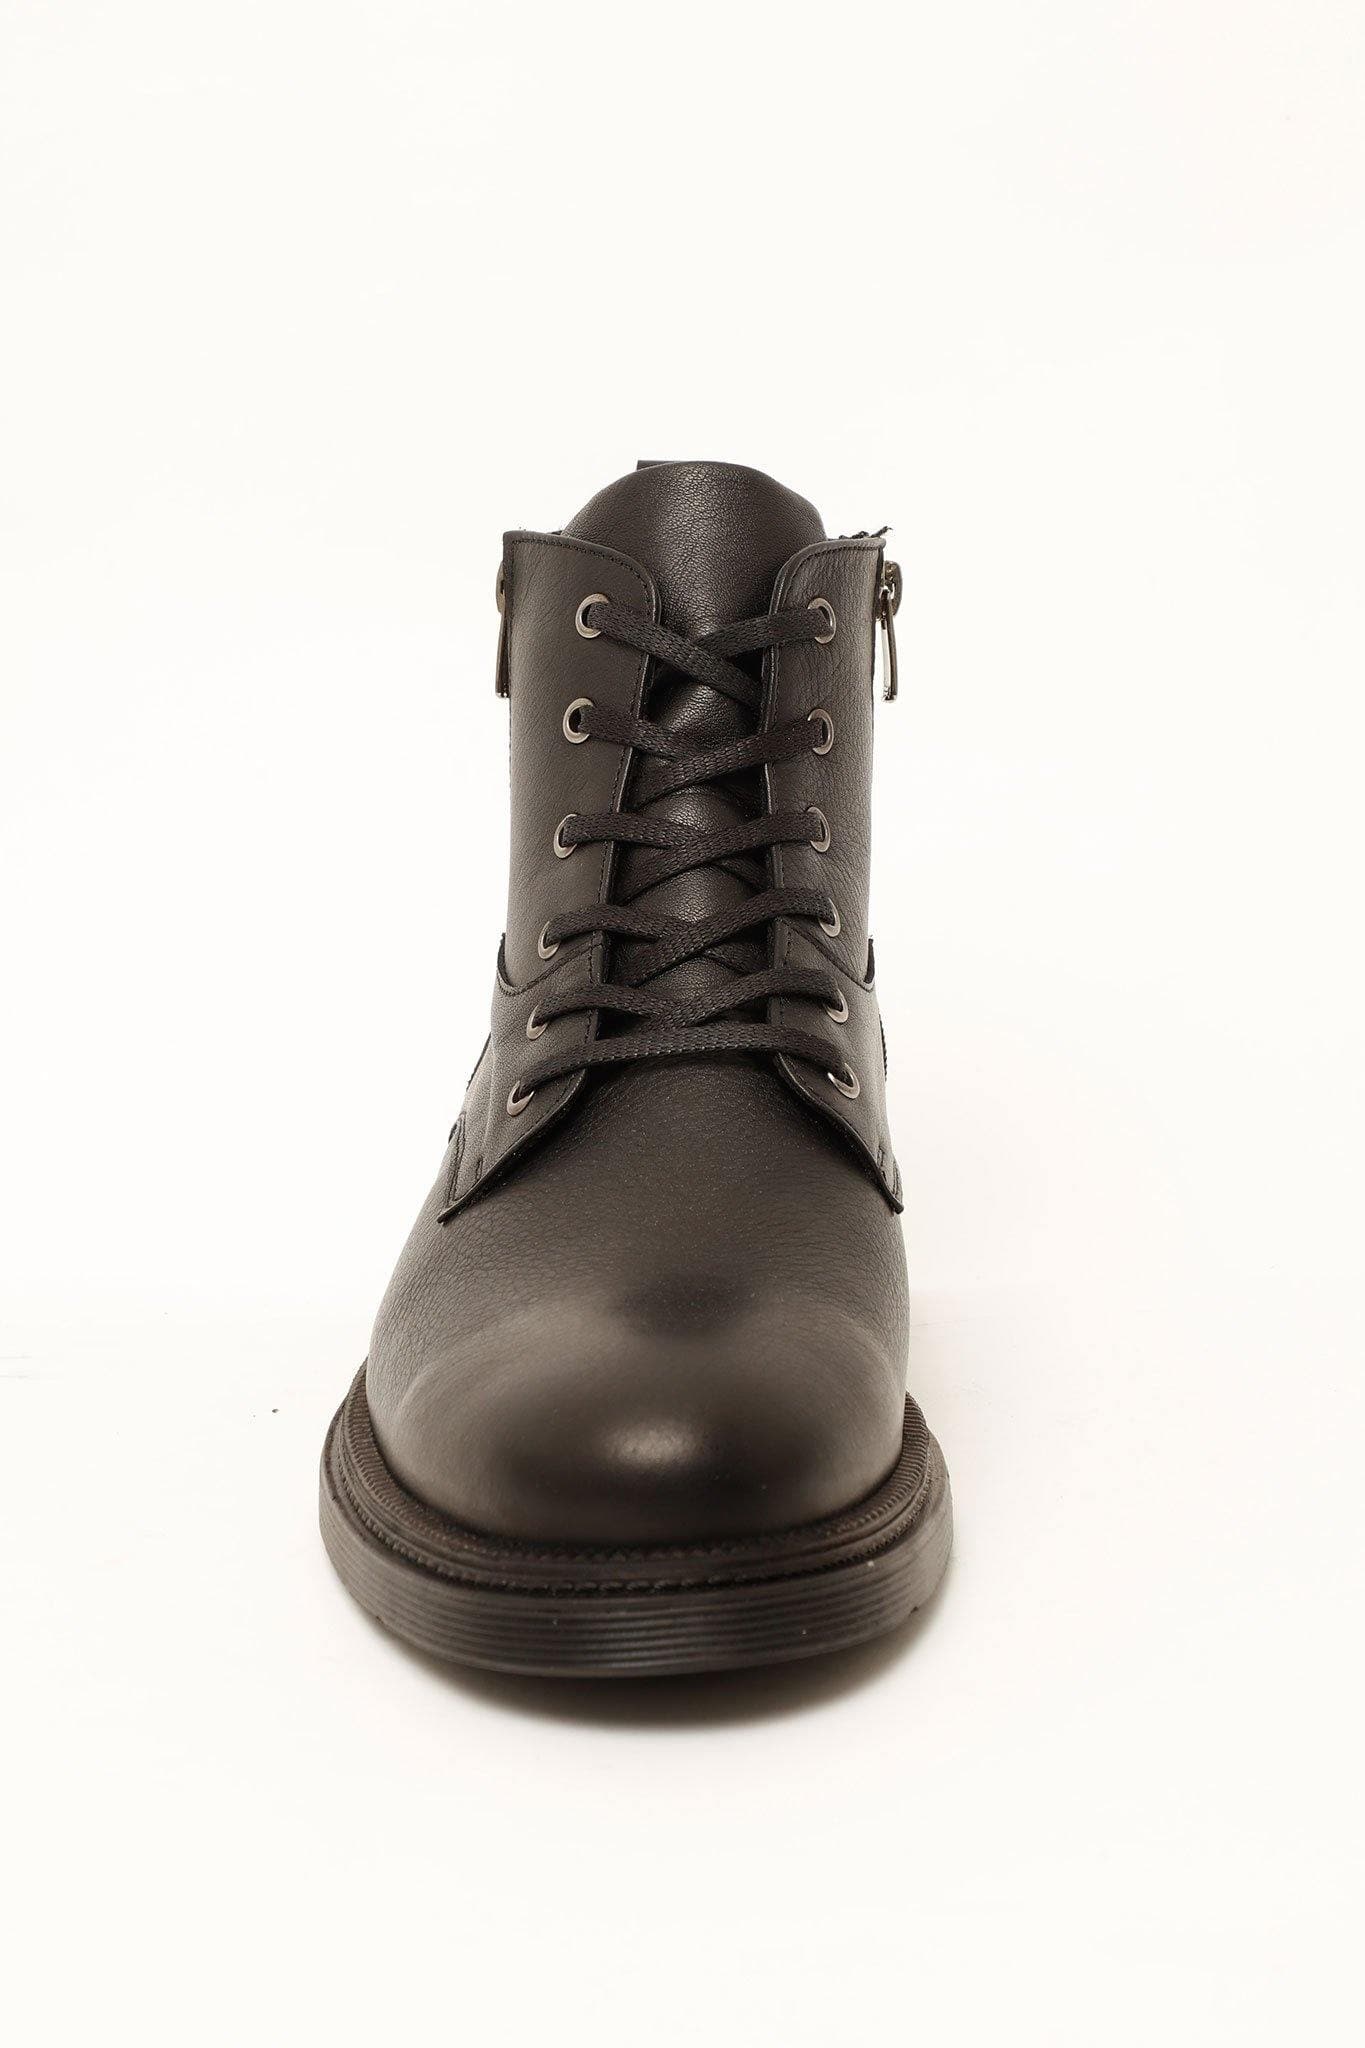 DOUBLE ZIP FAS BOOTS IN CHARCOAL, SHOE, CORADO, black, boots, men, shoe, coradomoda, coradomoda.com